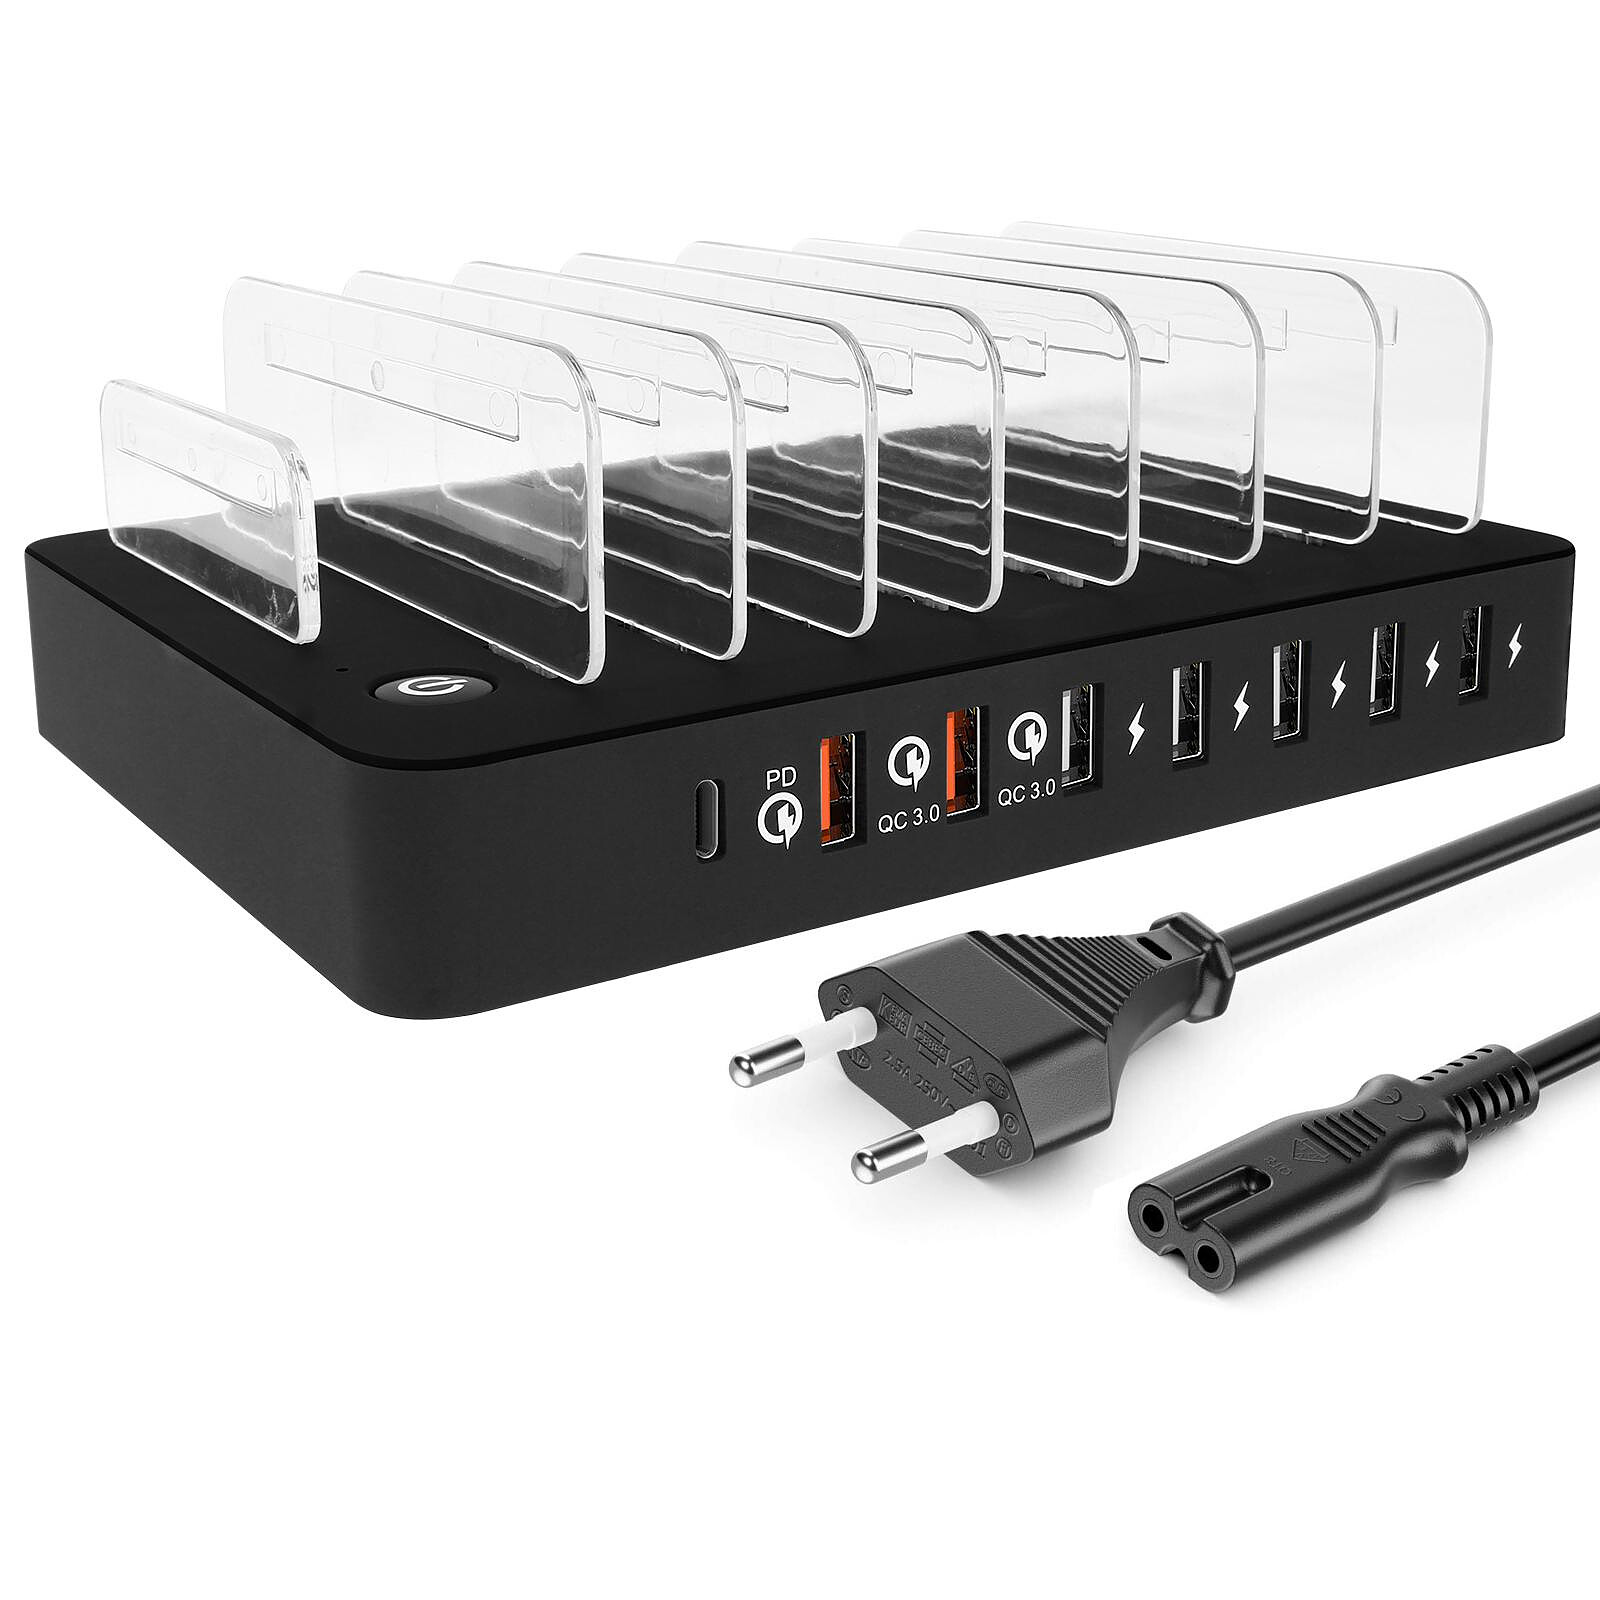 Avizar Station de charge Multiports 7 ports USB et 1 port USB-C